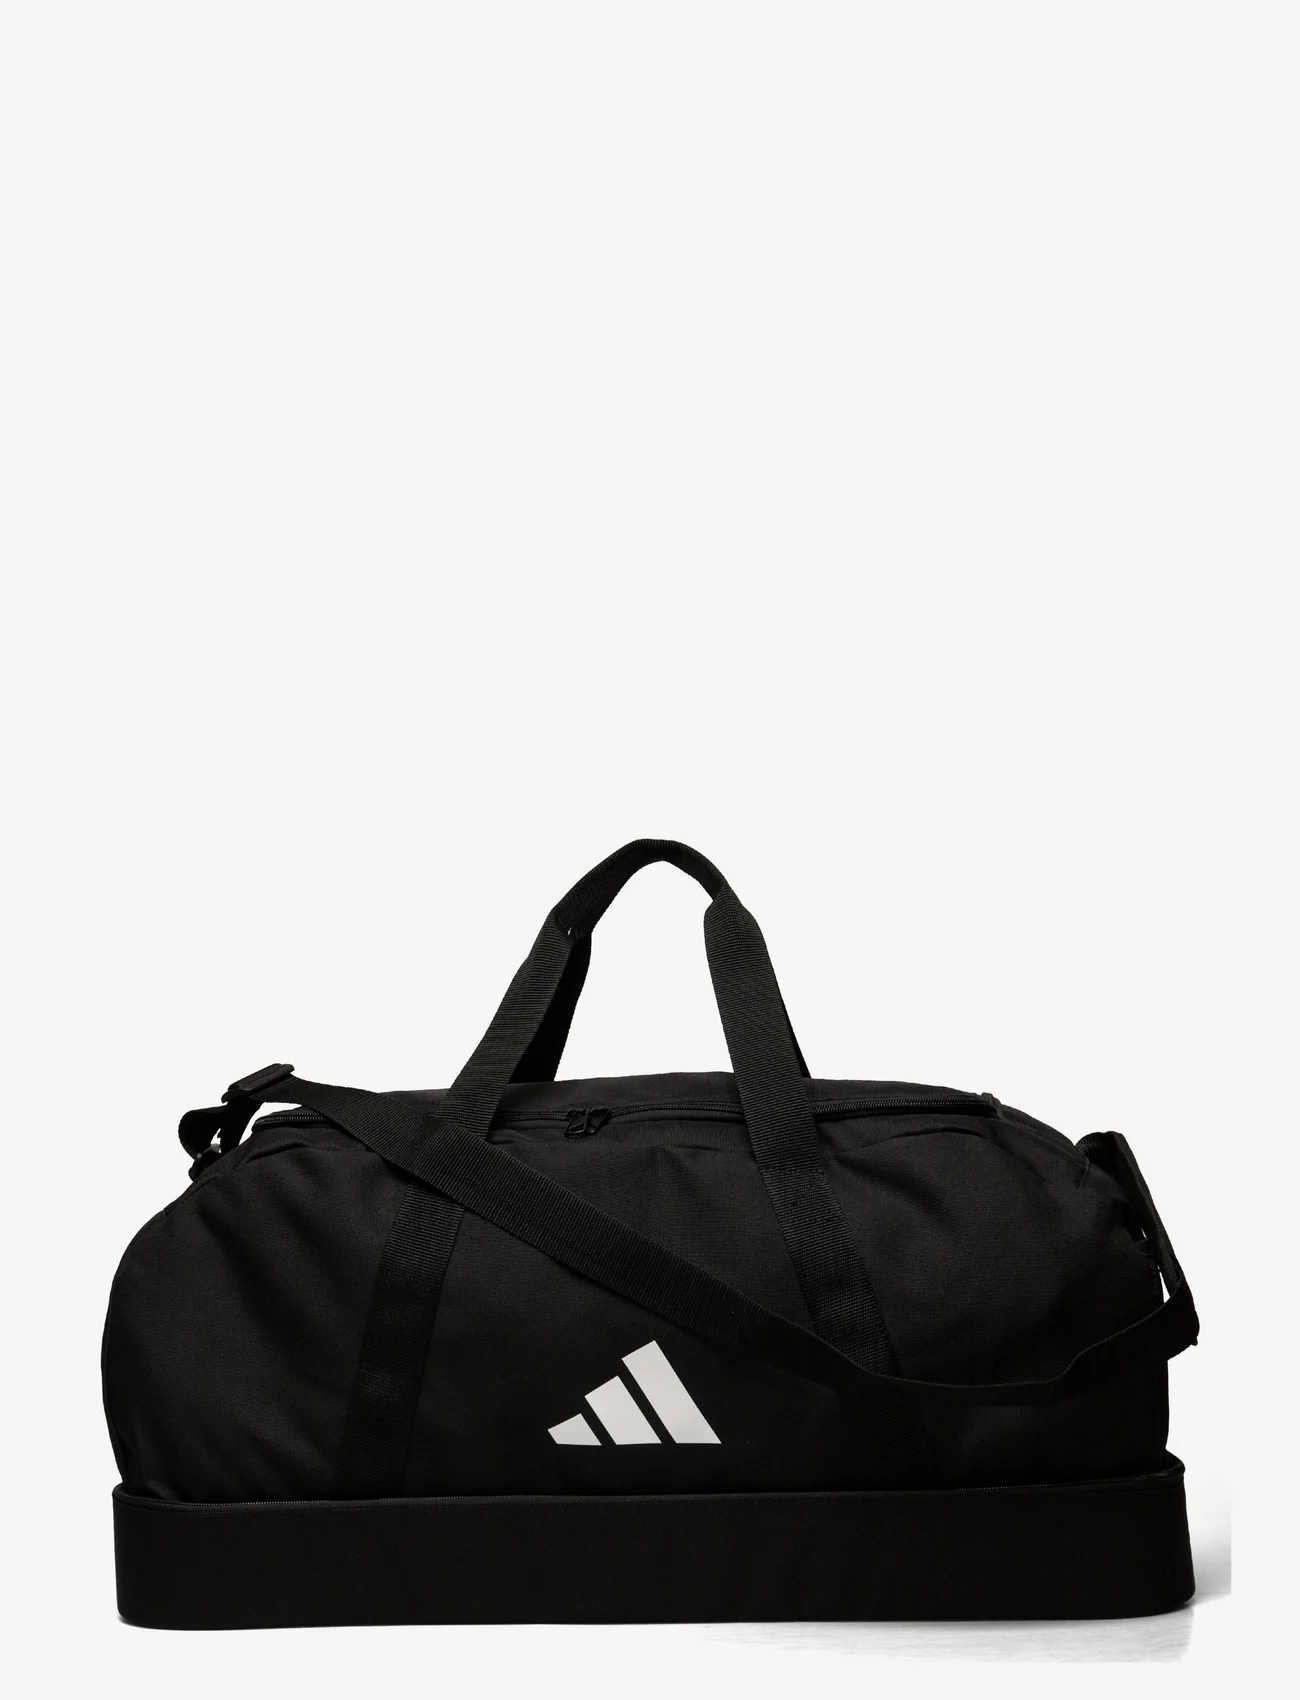 adidas Performance - TIRO LEAGUE DUFFLE BAG LARGE WITH BOTTOM COMPARTMENT - miesten - black/white - 0